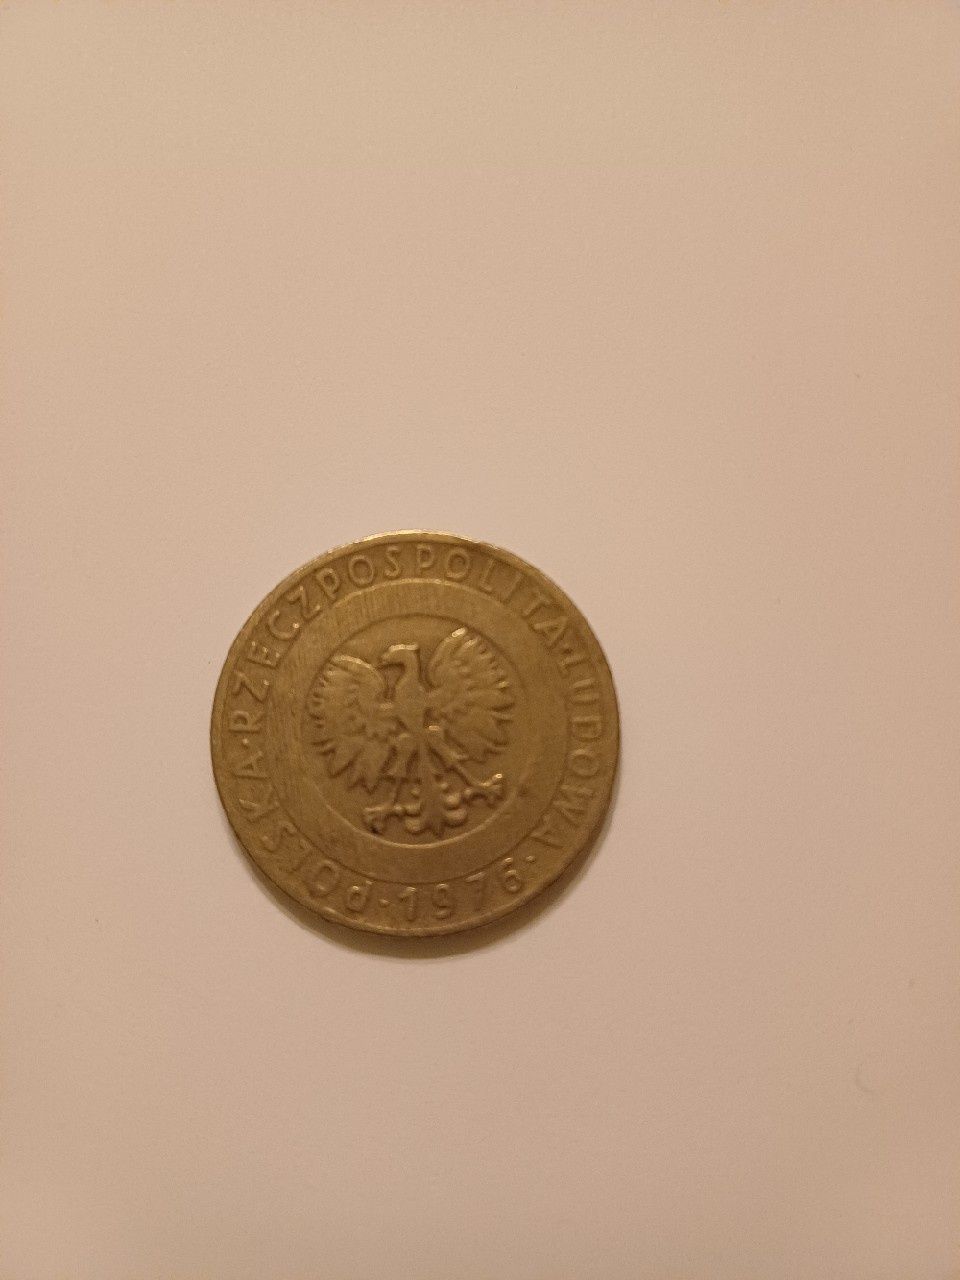 Moneta 20 zł z 1976 roku